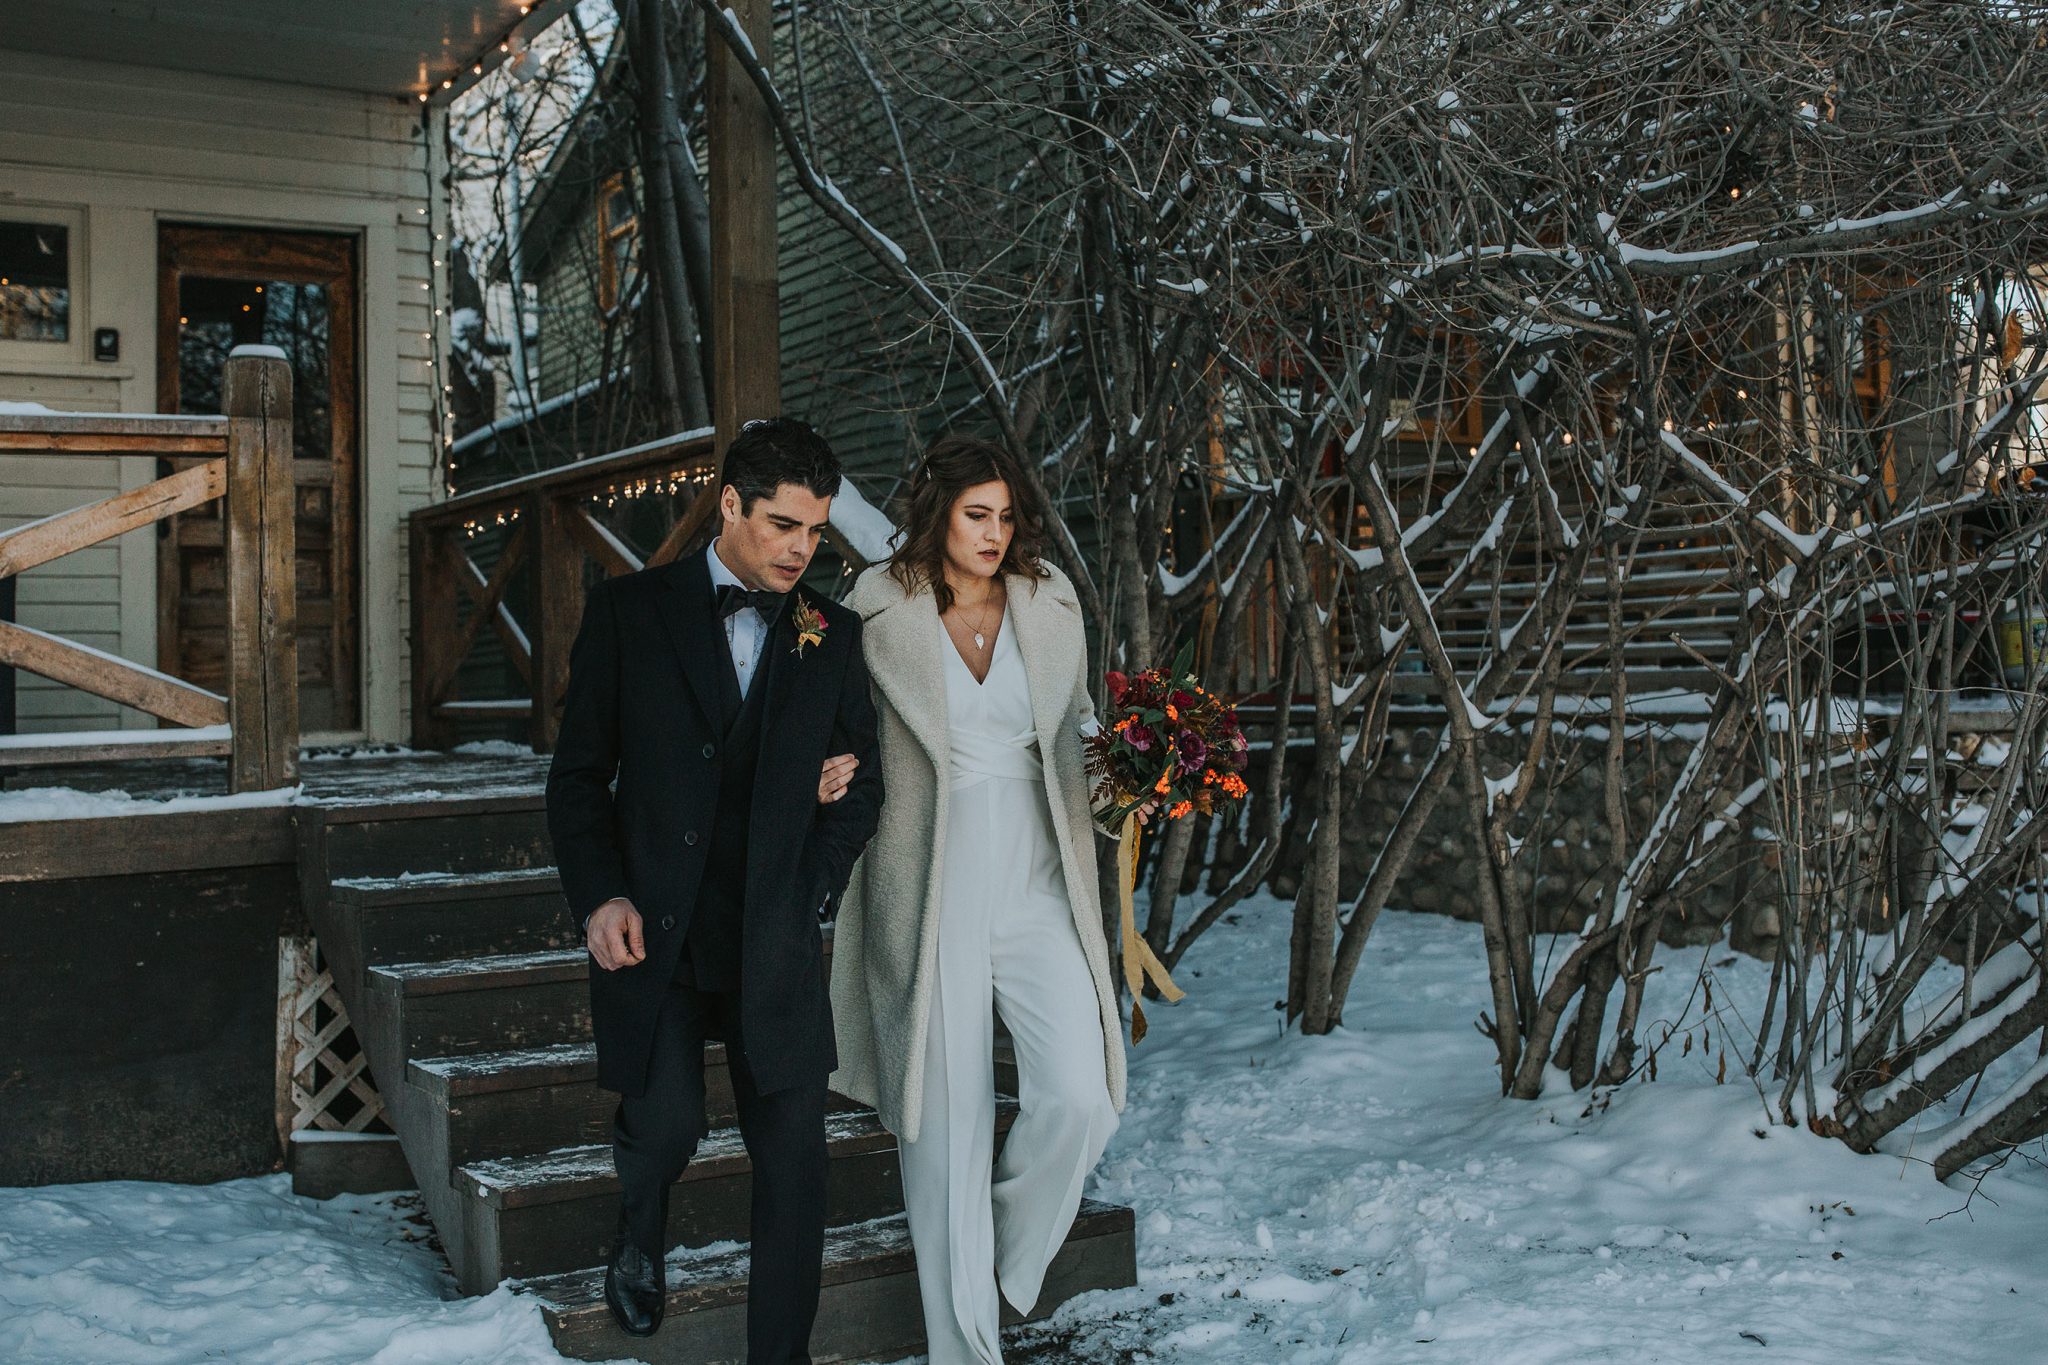 Simple Intimate Calgary Elopemen - wedding featured on Bronte Bride, Elopement Calgary, City Elopement, Simple Wedding